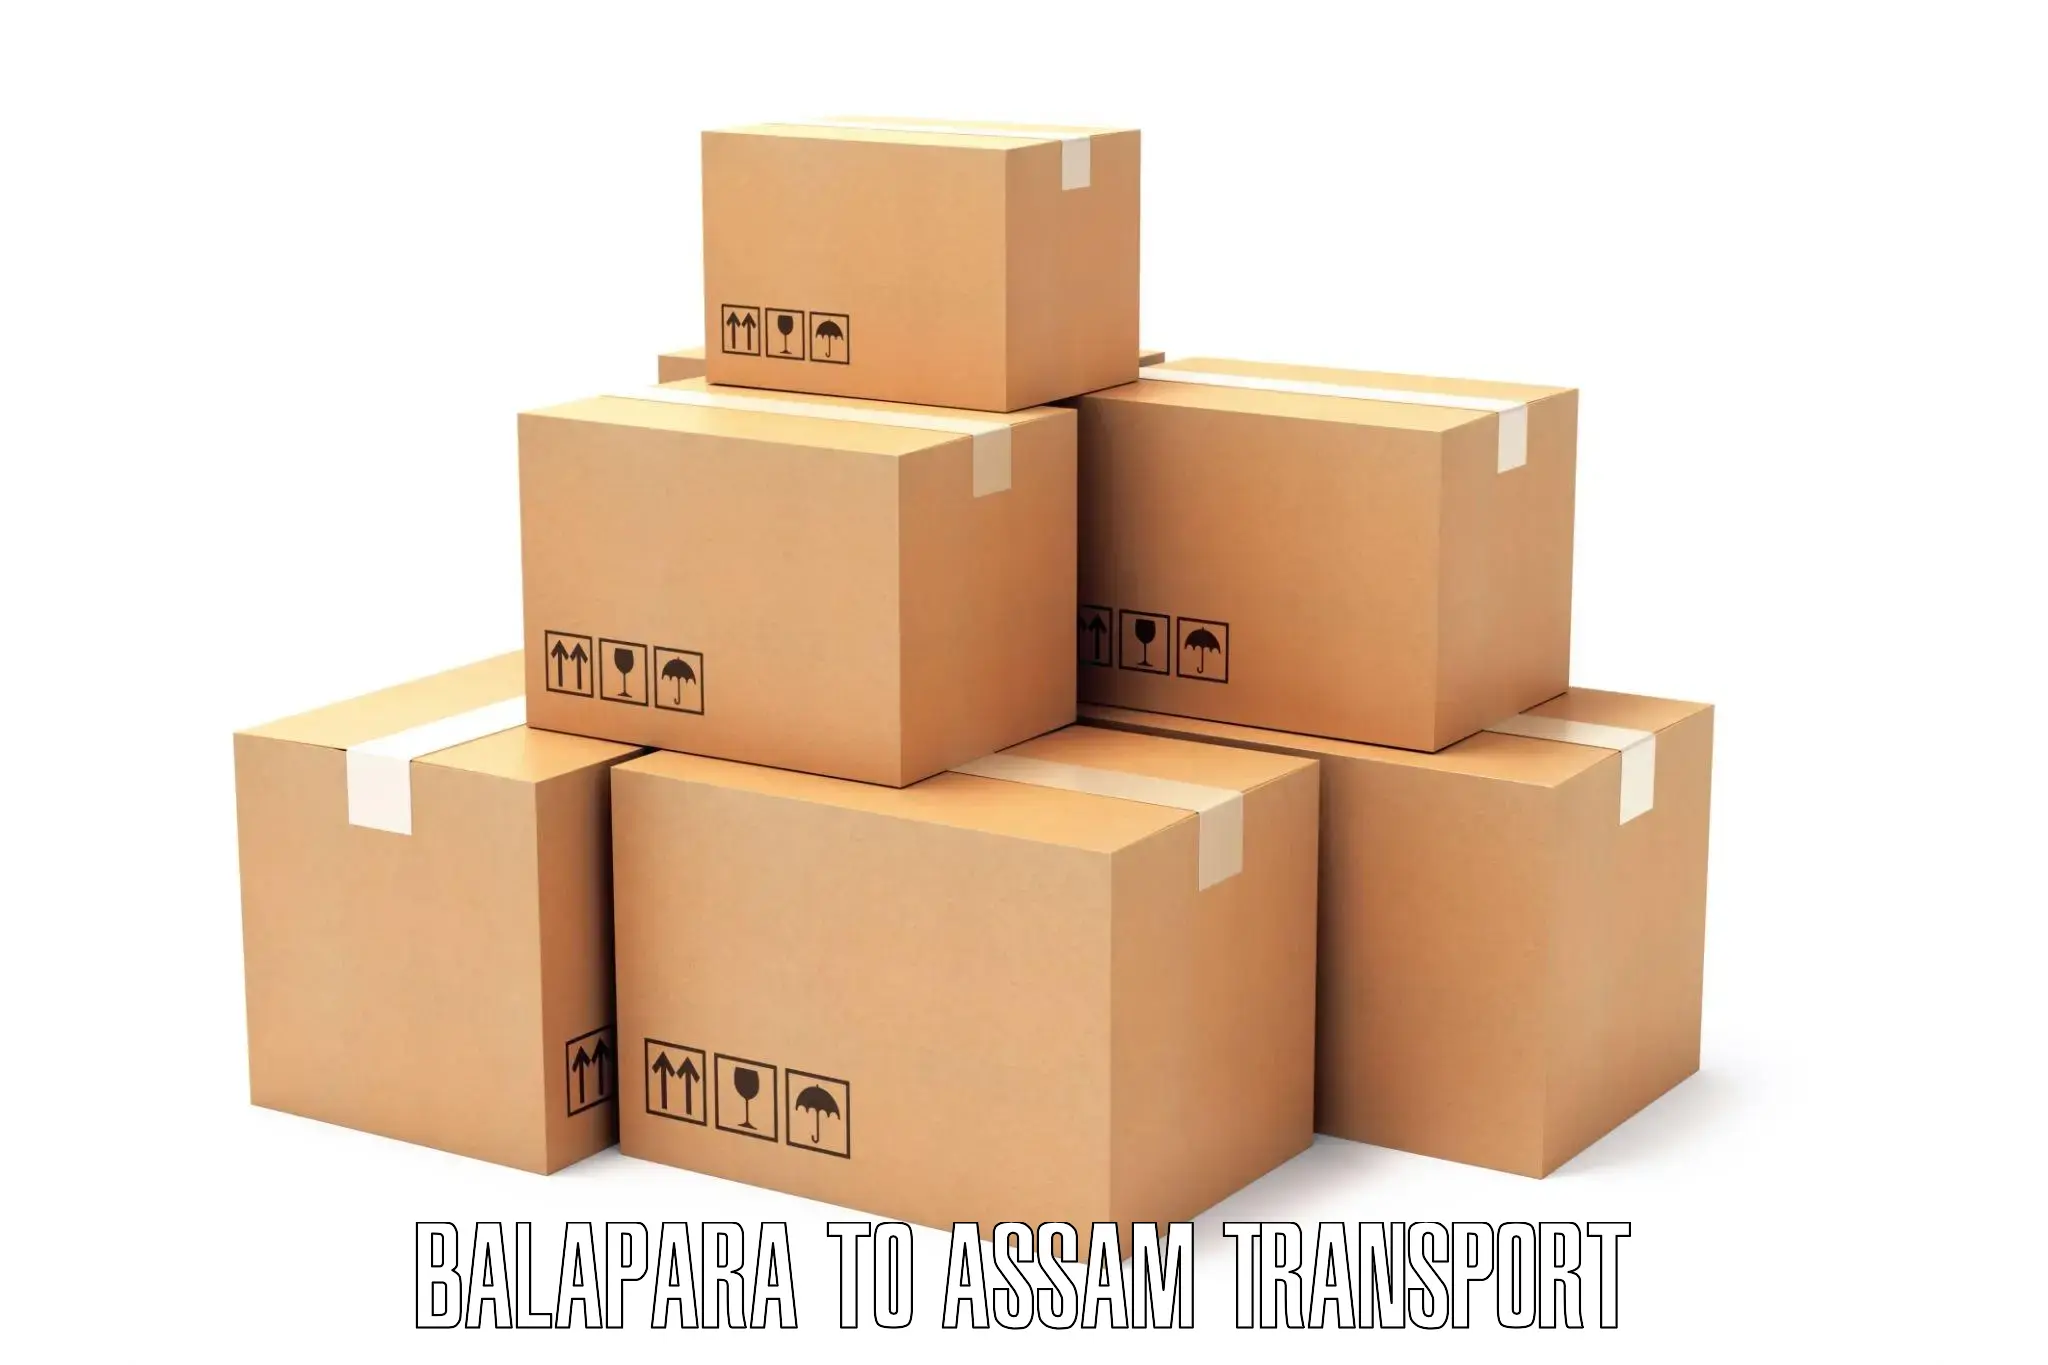 Daily parcel service transport Balapara to Bhergaon